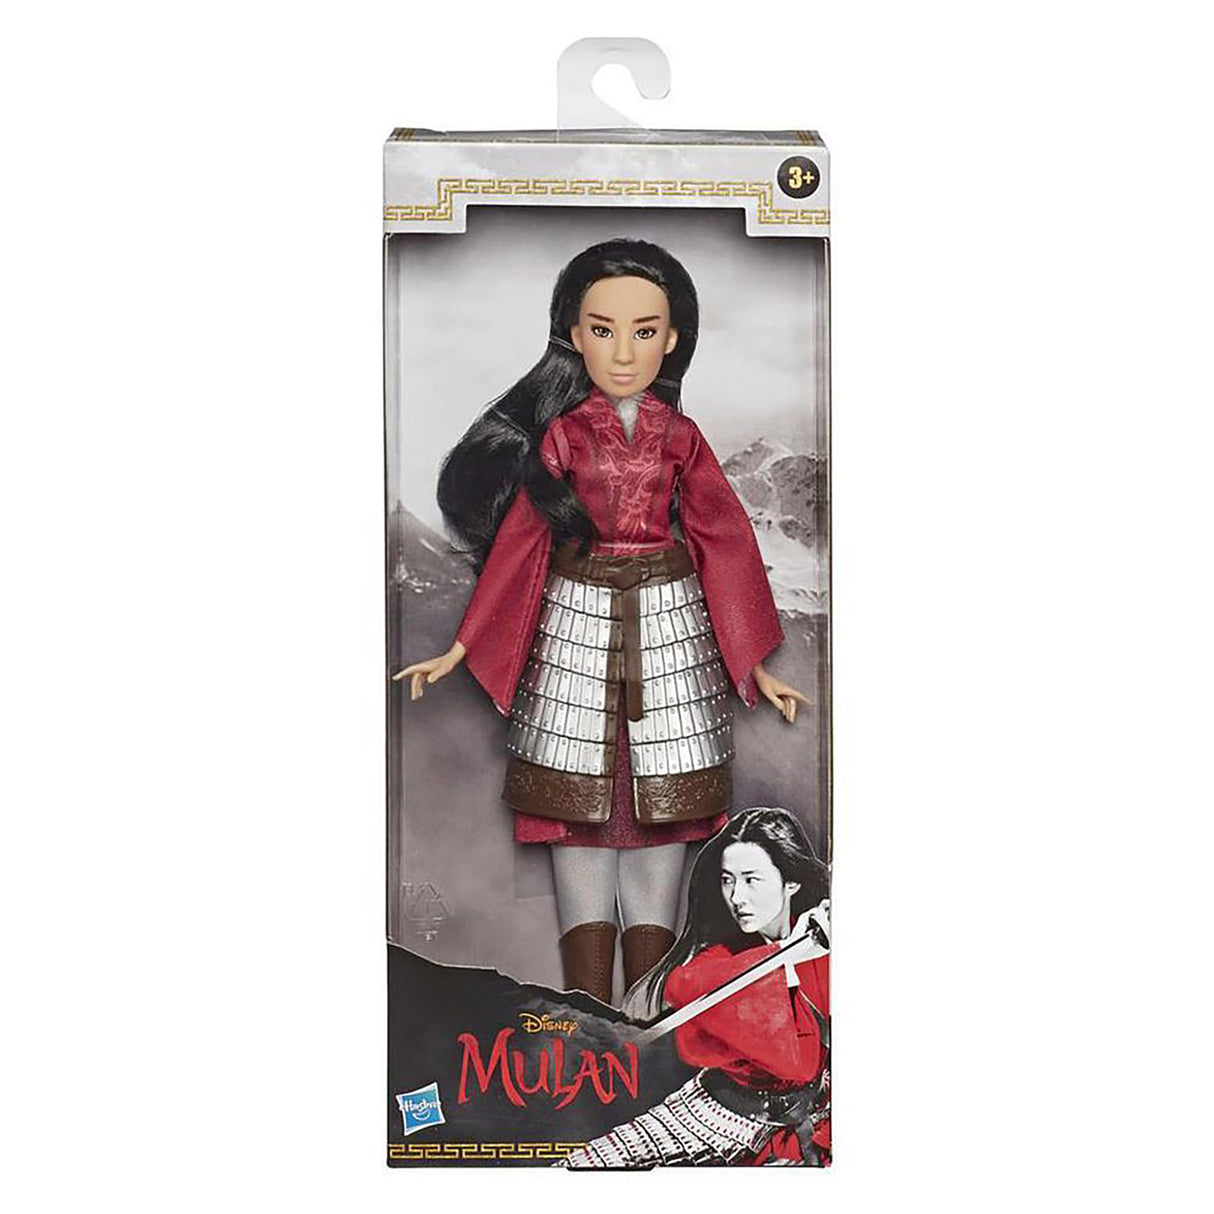 Disney Princess Mulan Fashion Doll with Accessories